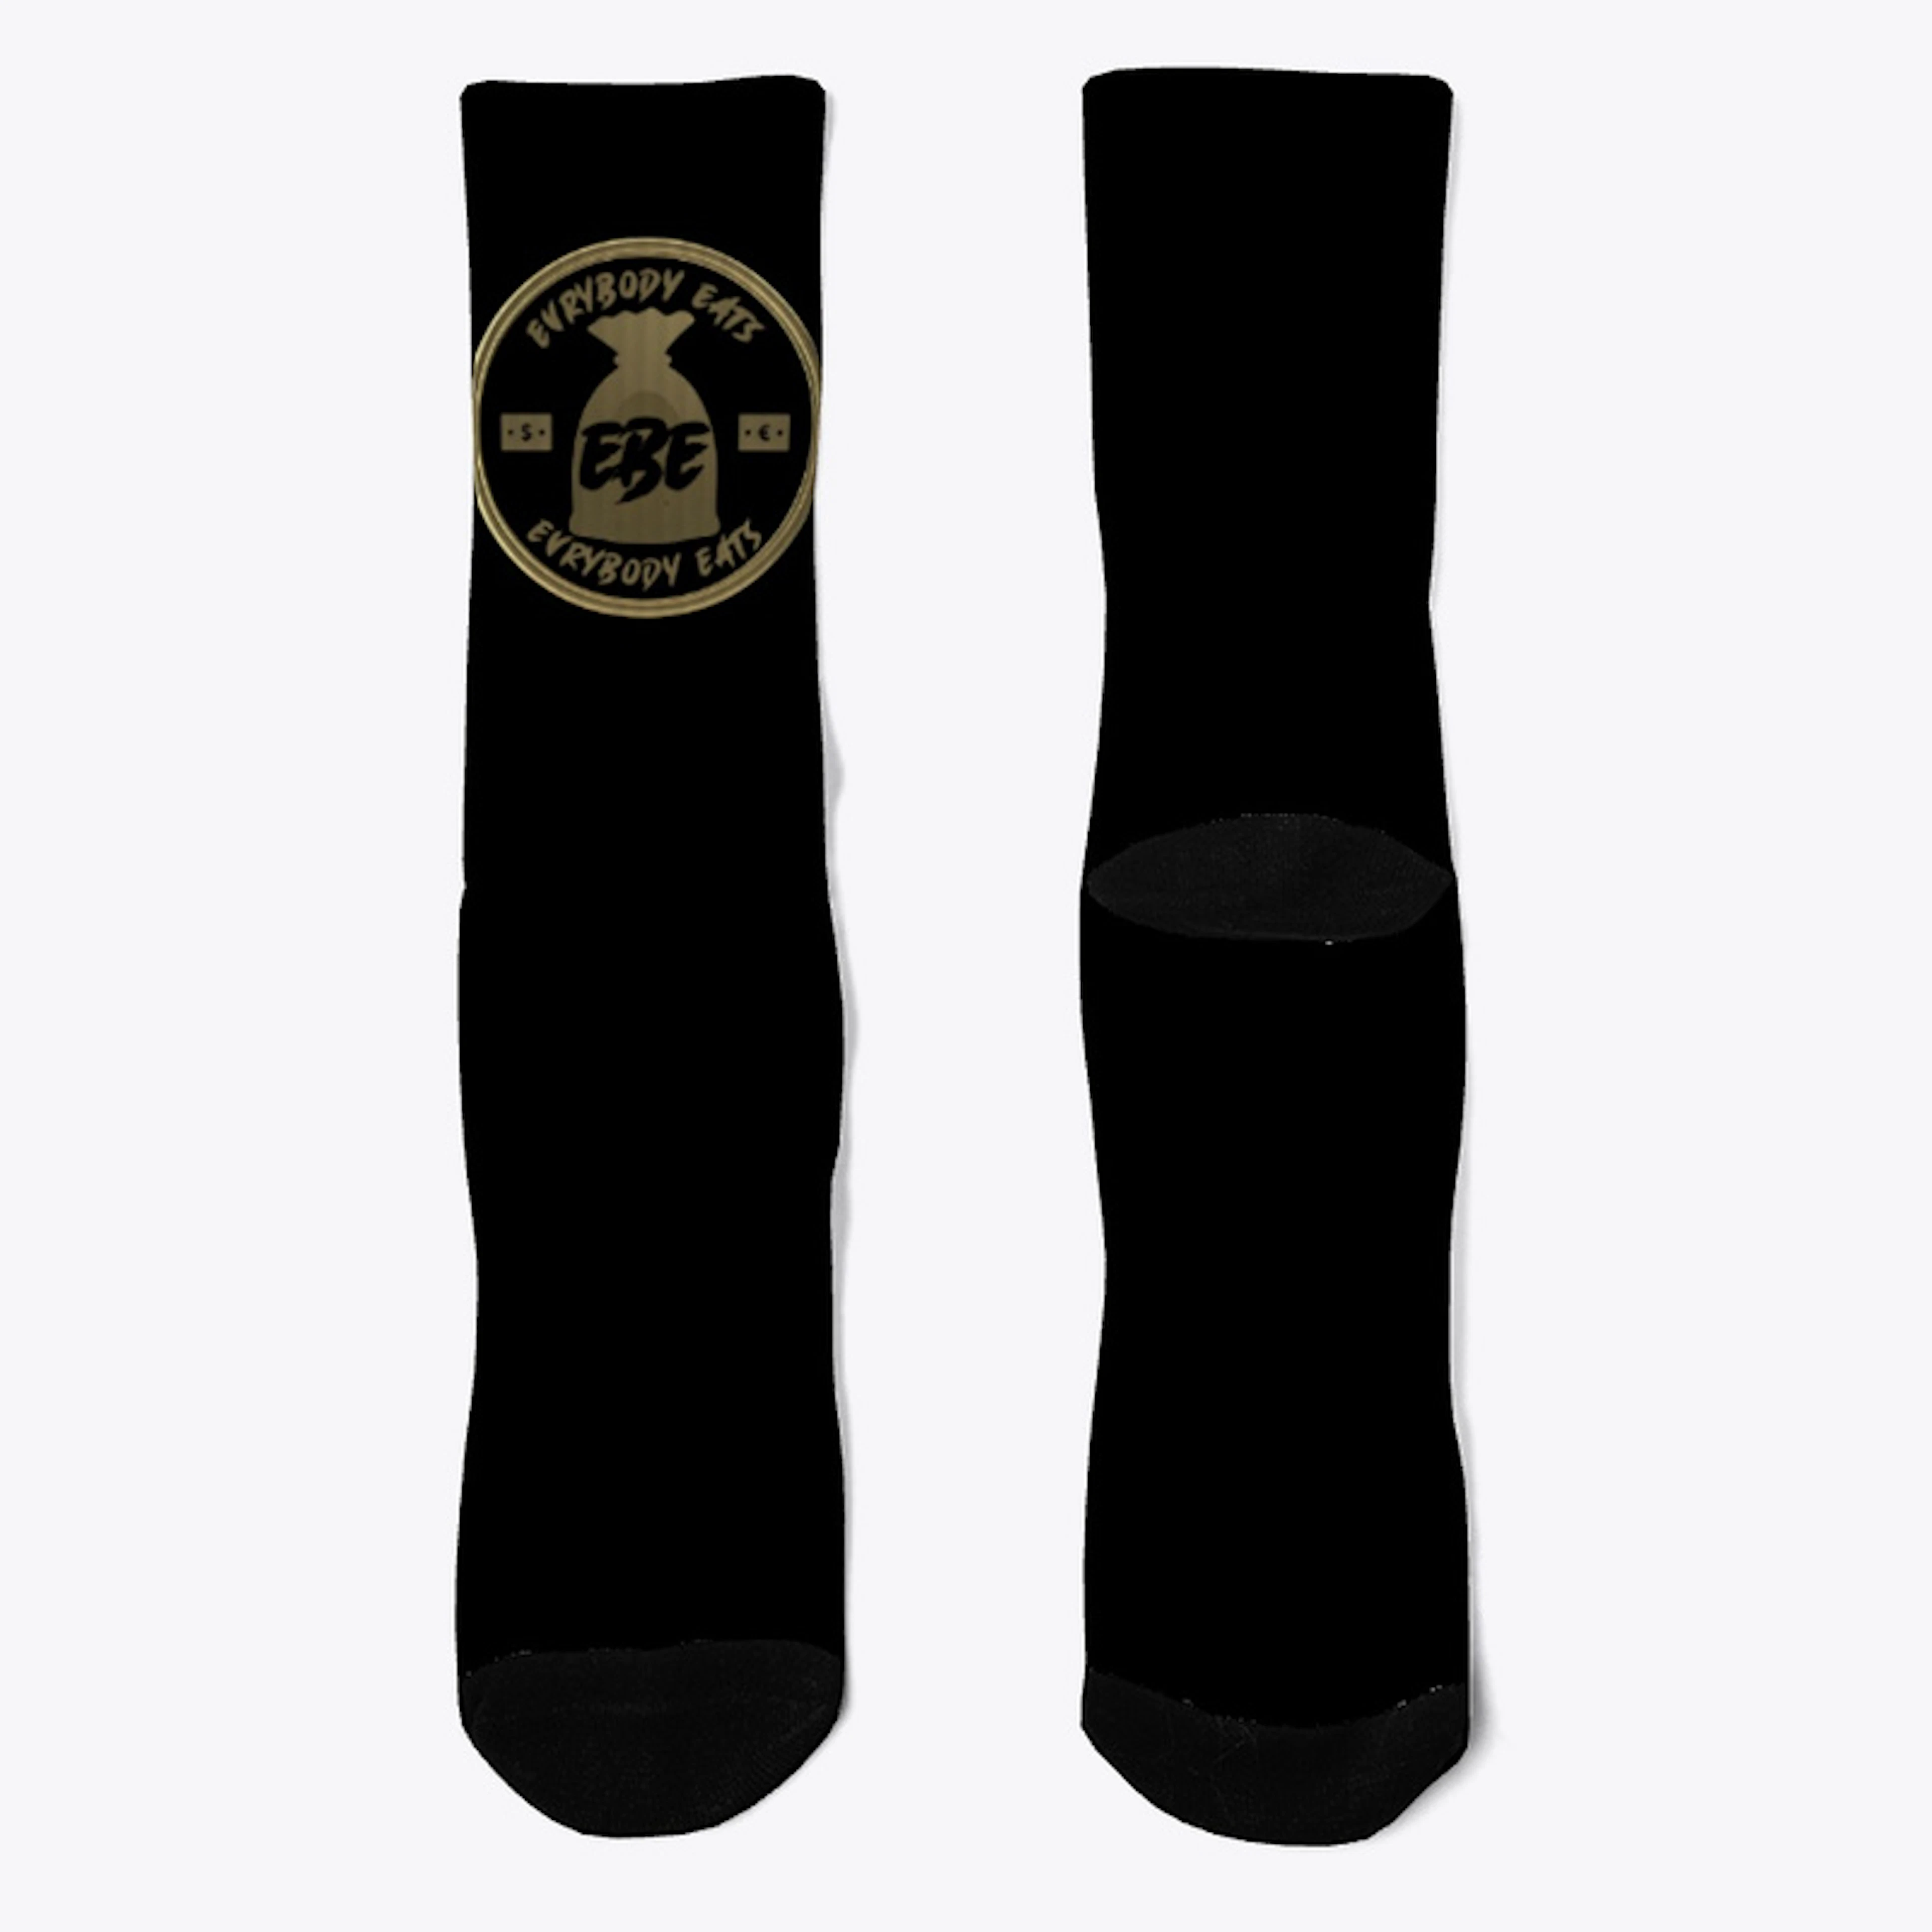 Evrybody Eats Logo Socks